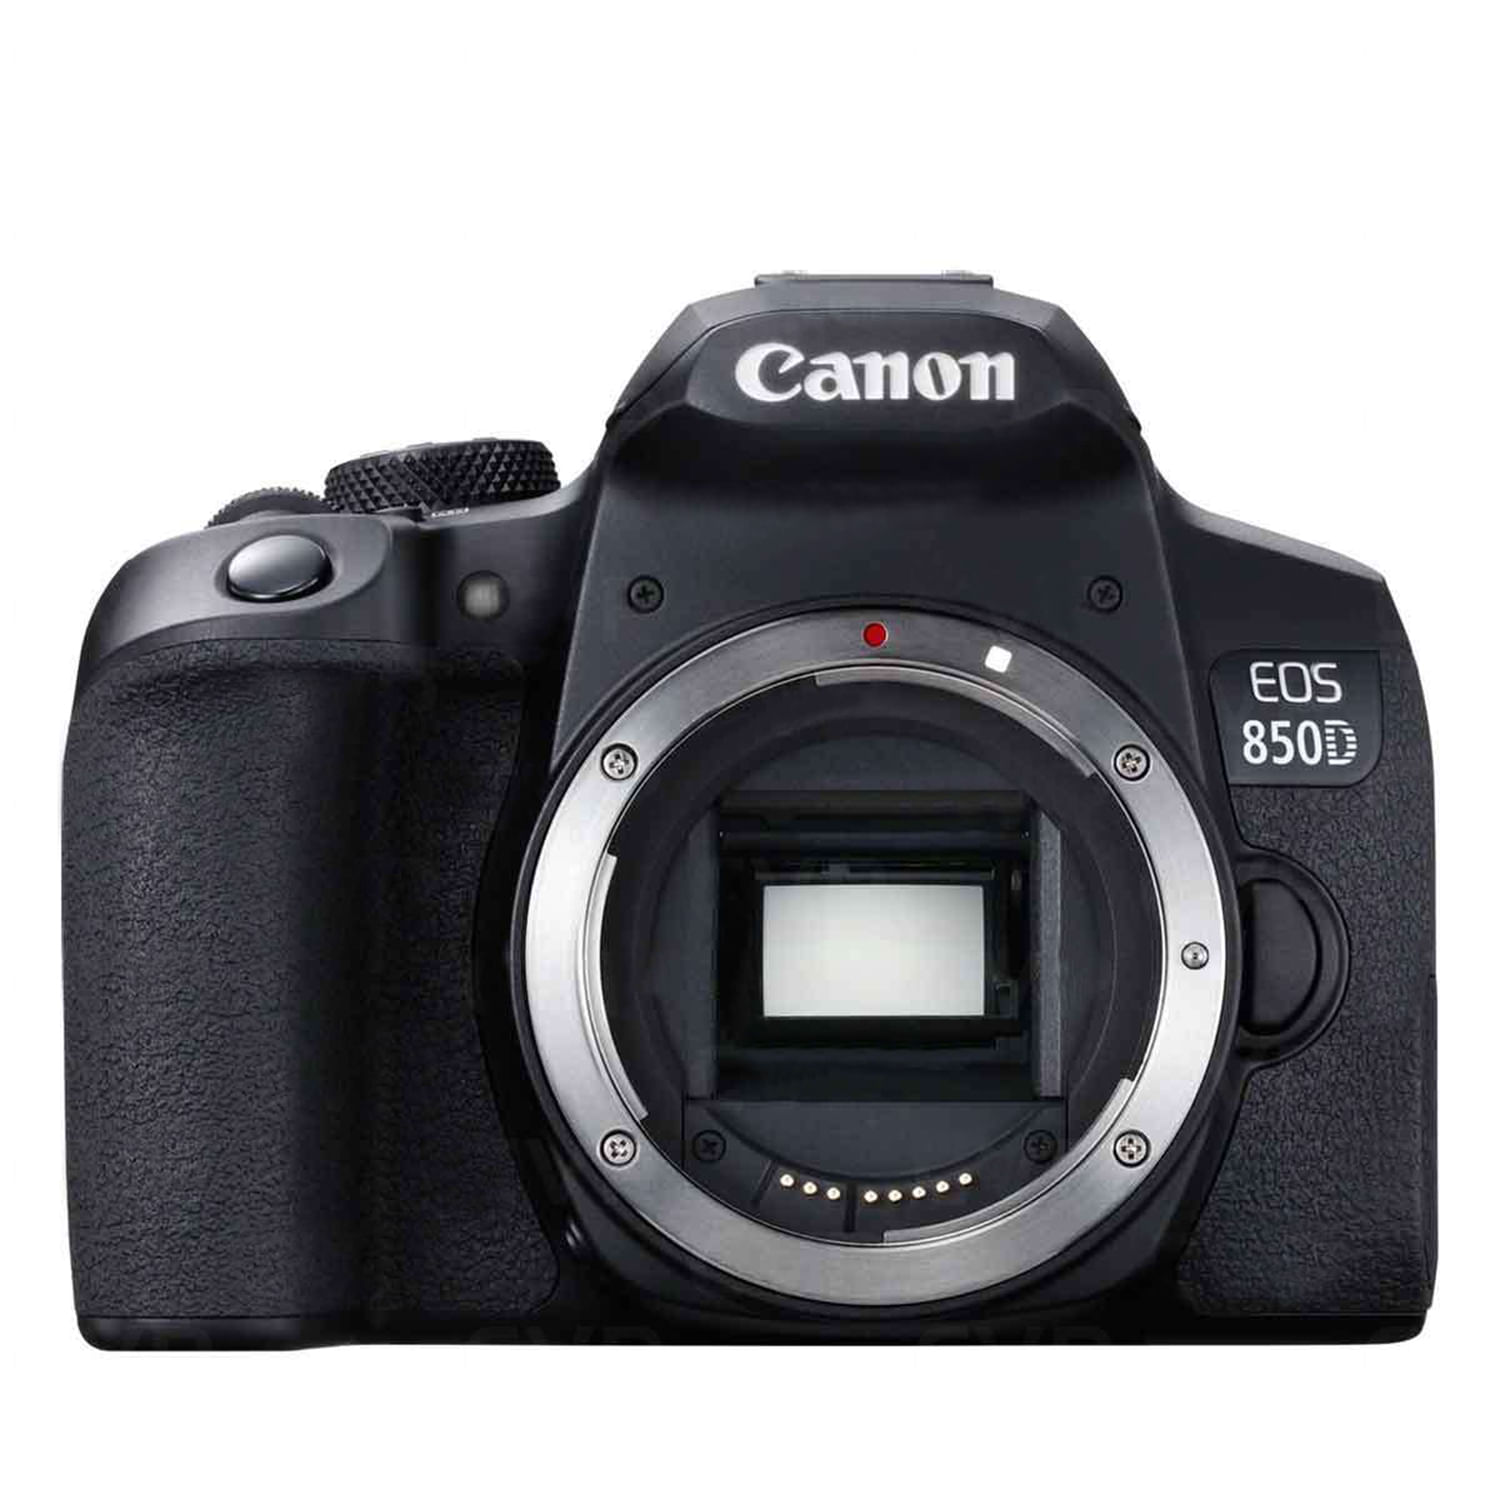 Zeal Disparity Show Canon EOS 850D Aparat Foto DSLR 24.1MP CMOS Body Negru - F64.ro - F64.ro